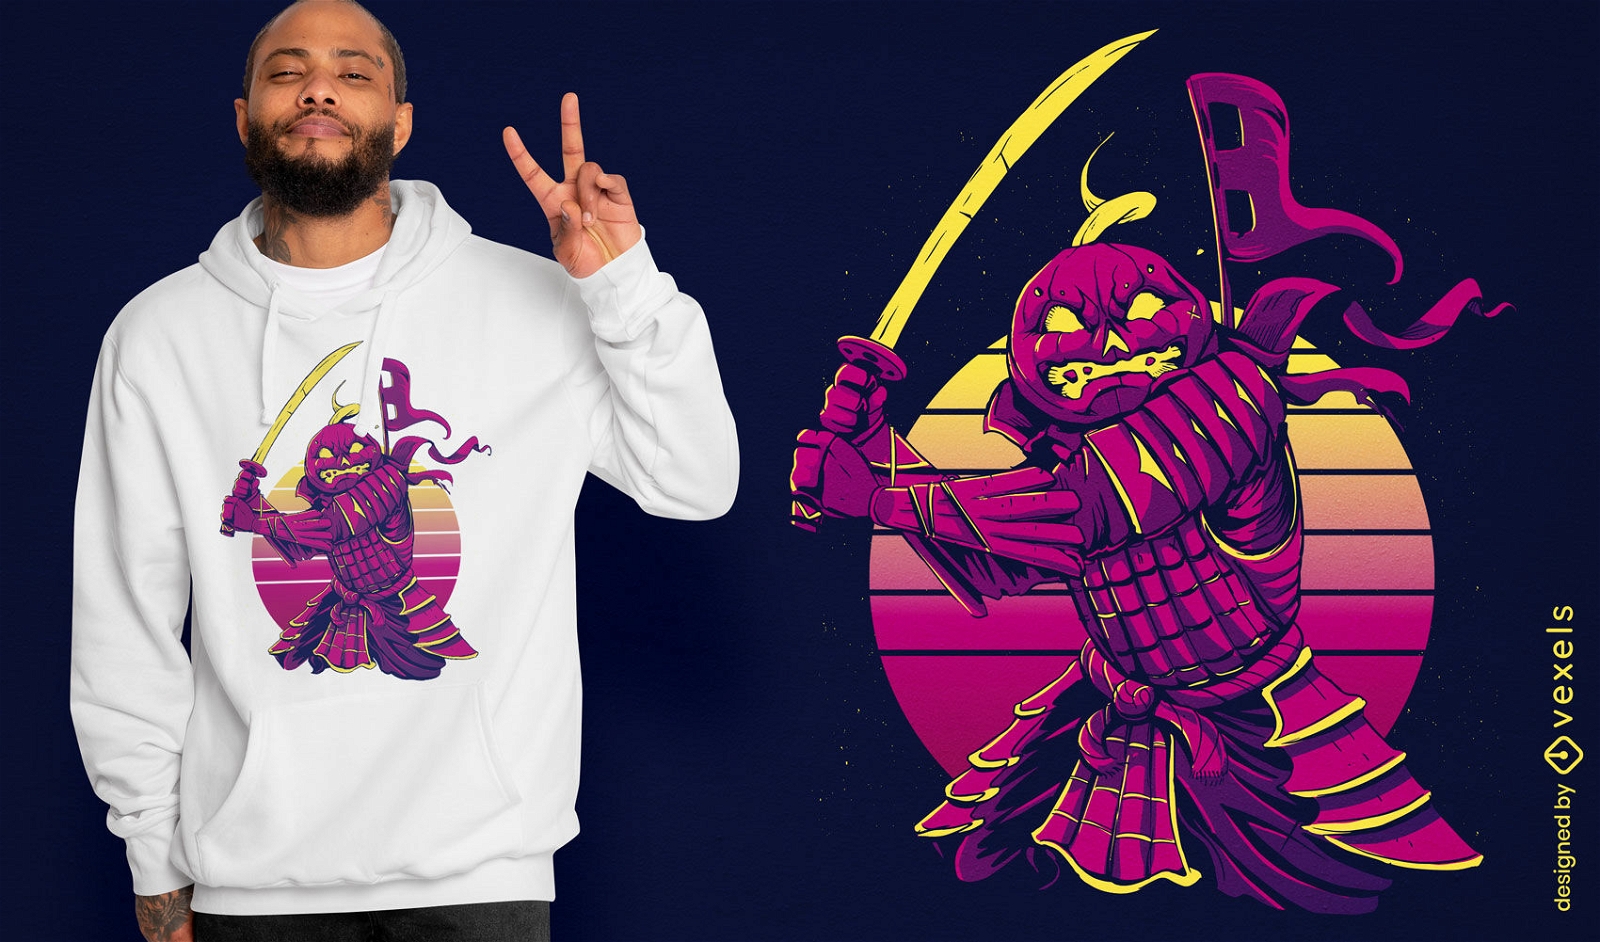 Jack o lantern samurai t-shirt design